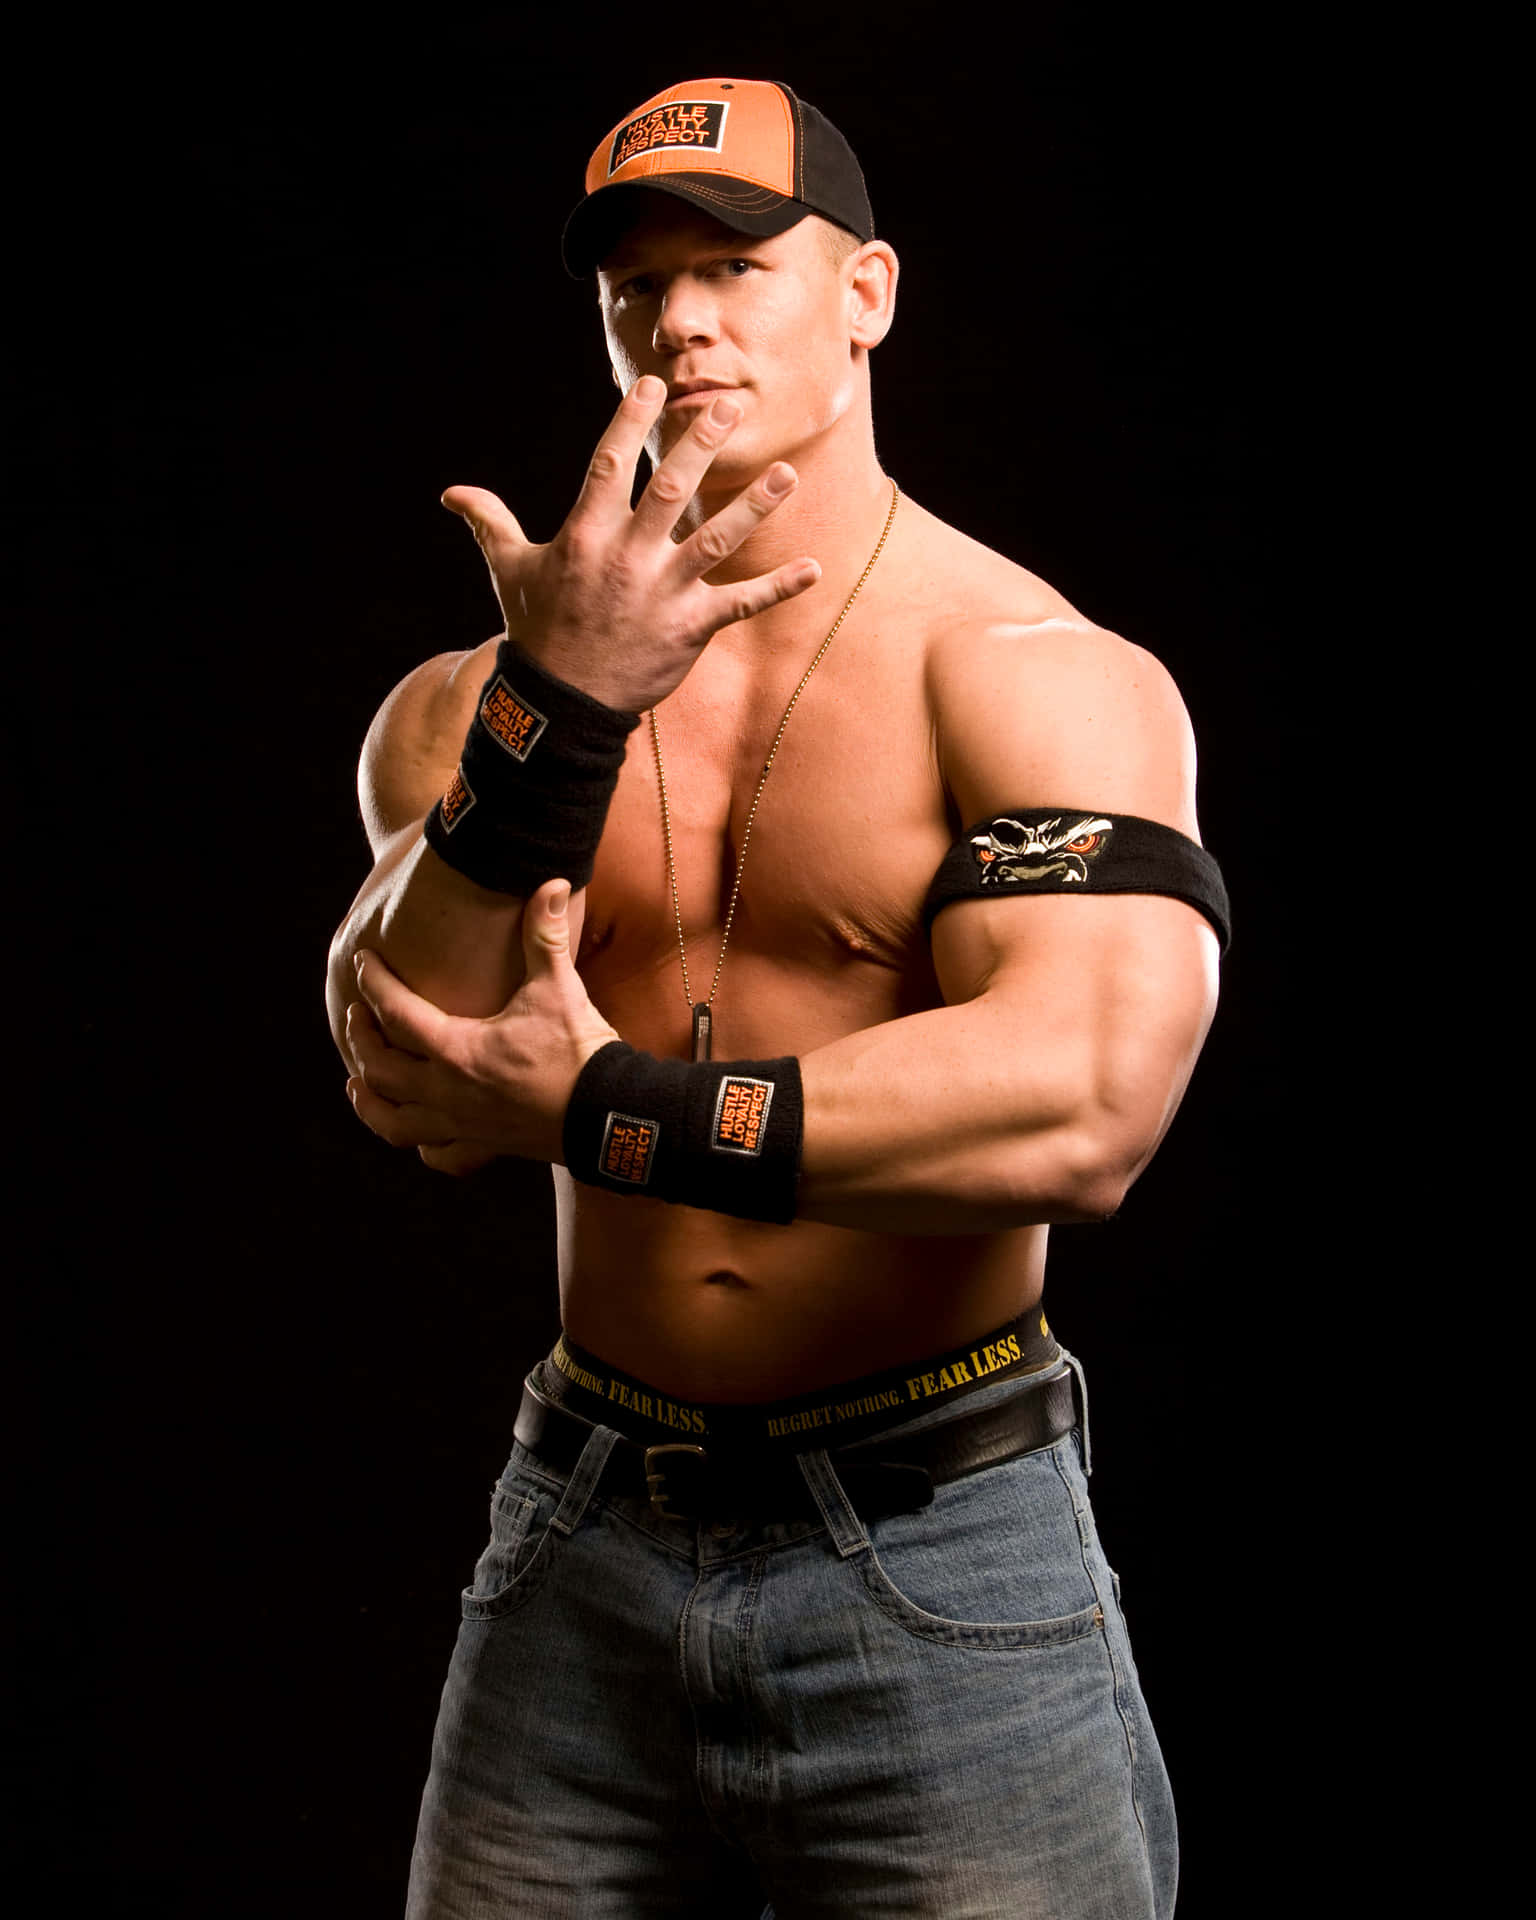 John Cena strikes a powerful pose